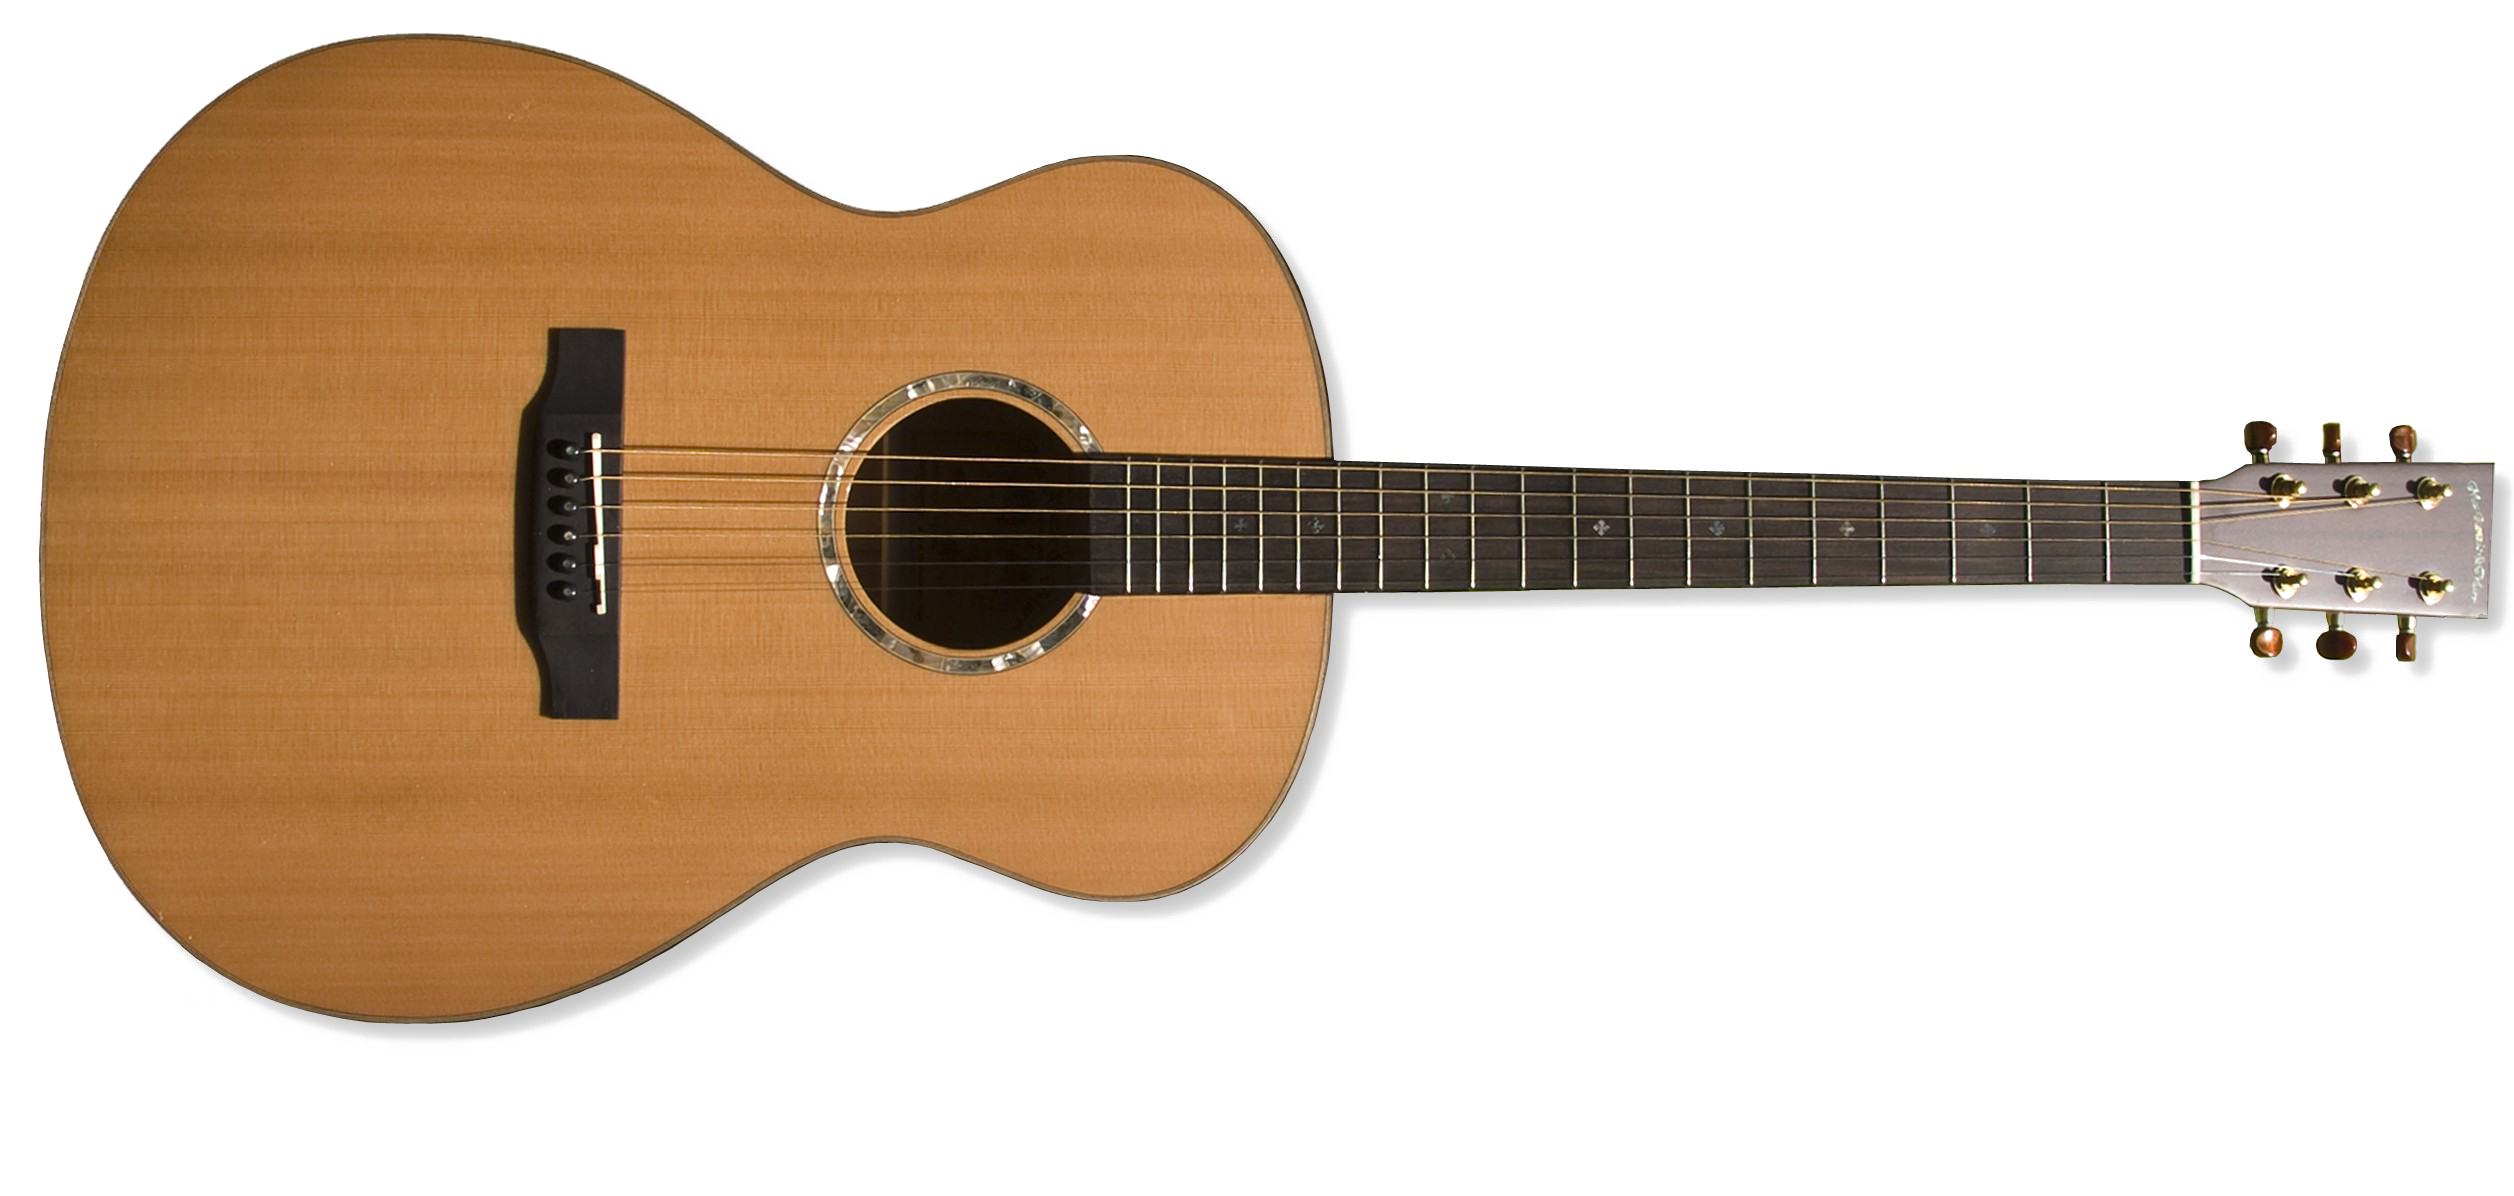 Gitar kayu PNG Gambar berkualitas tinggi